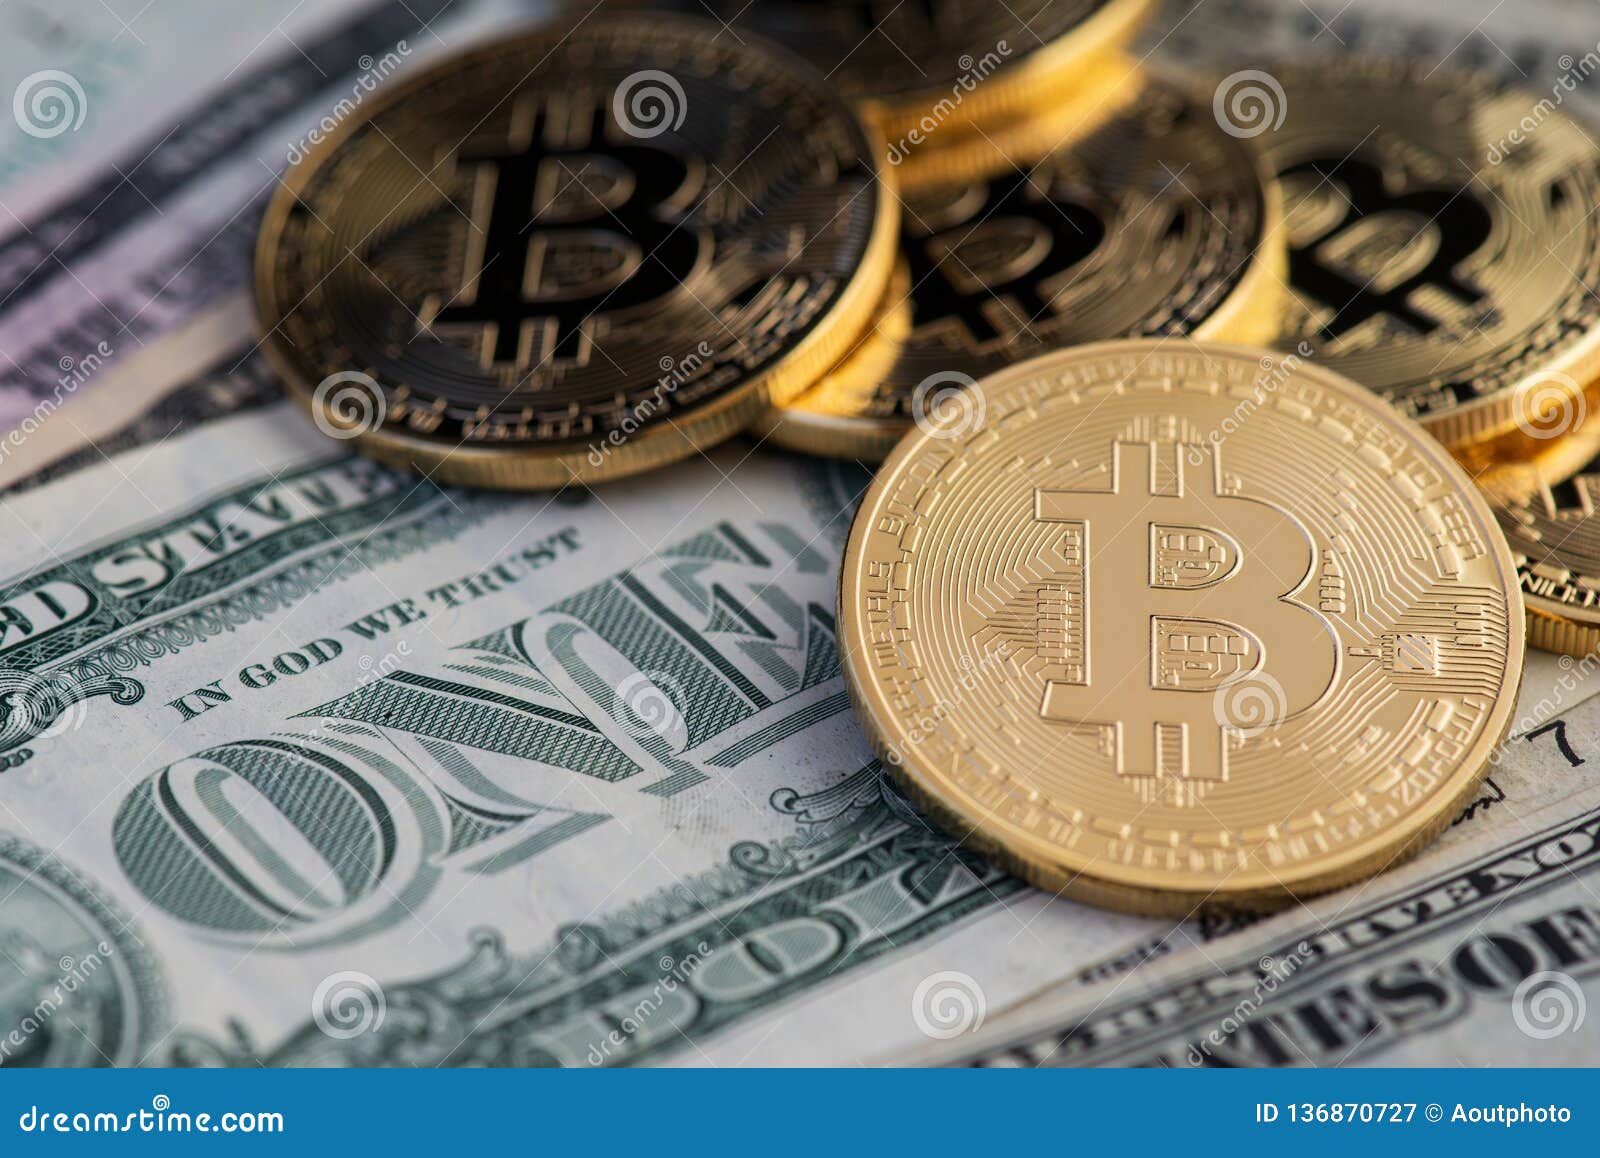 bitcoins to usd